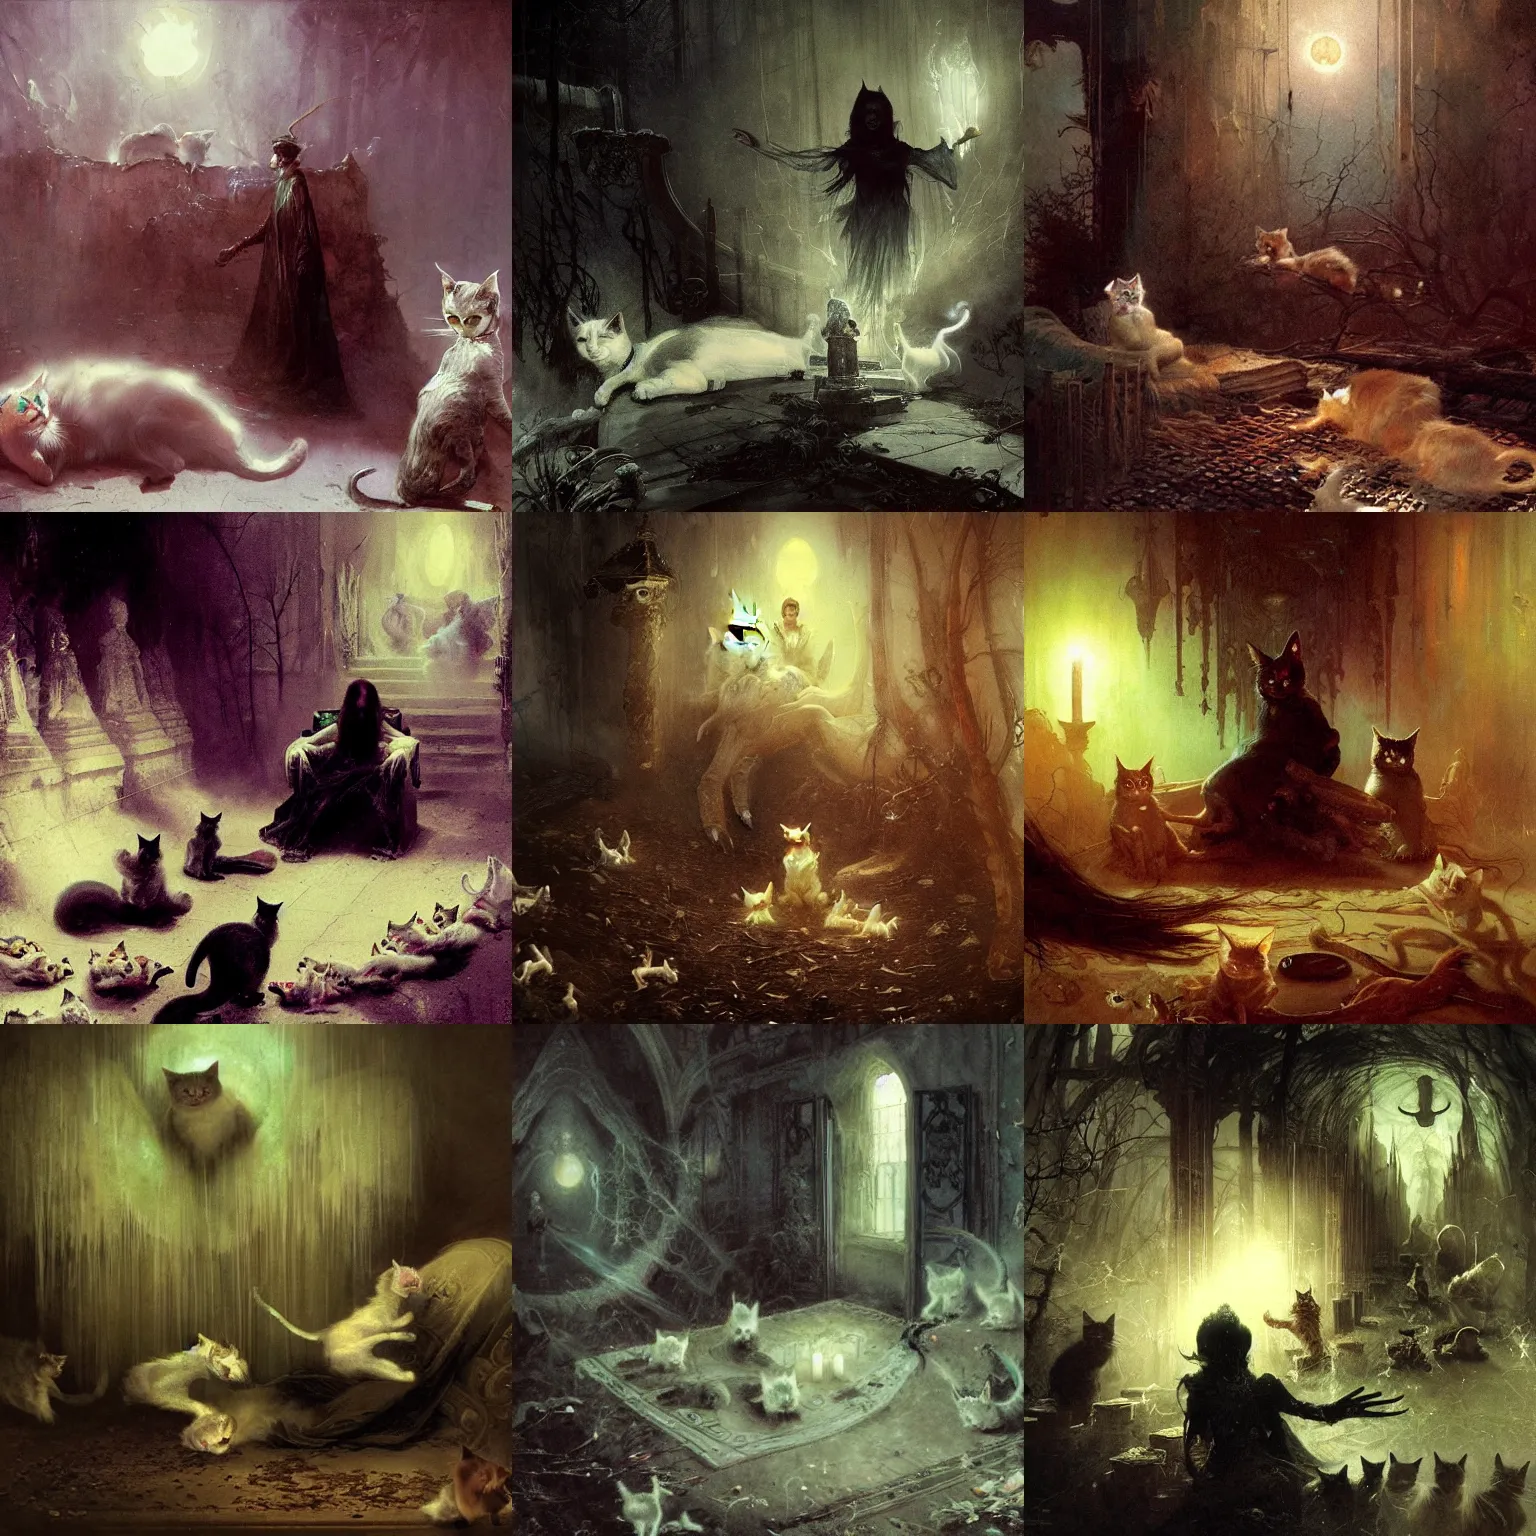 Prompt: sleeping necromancer haunted by hungry ghost cats, aleksi briclot, albert bierstadt